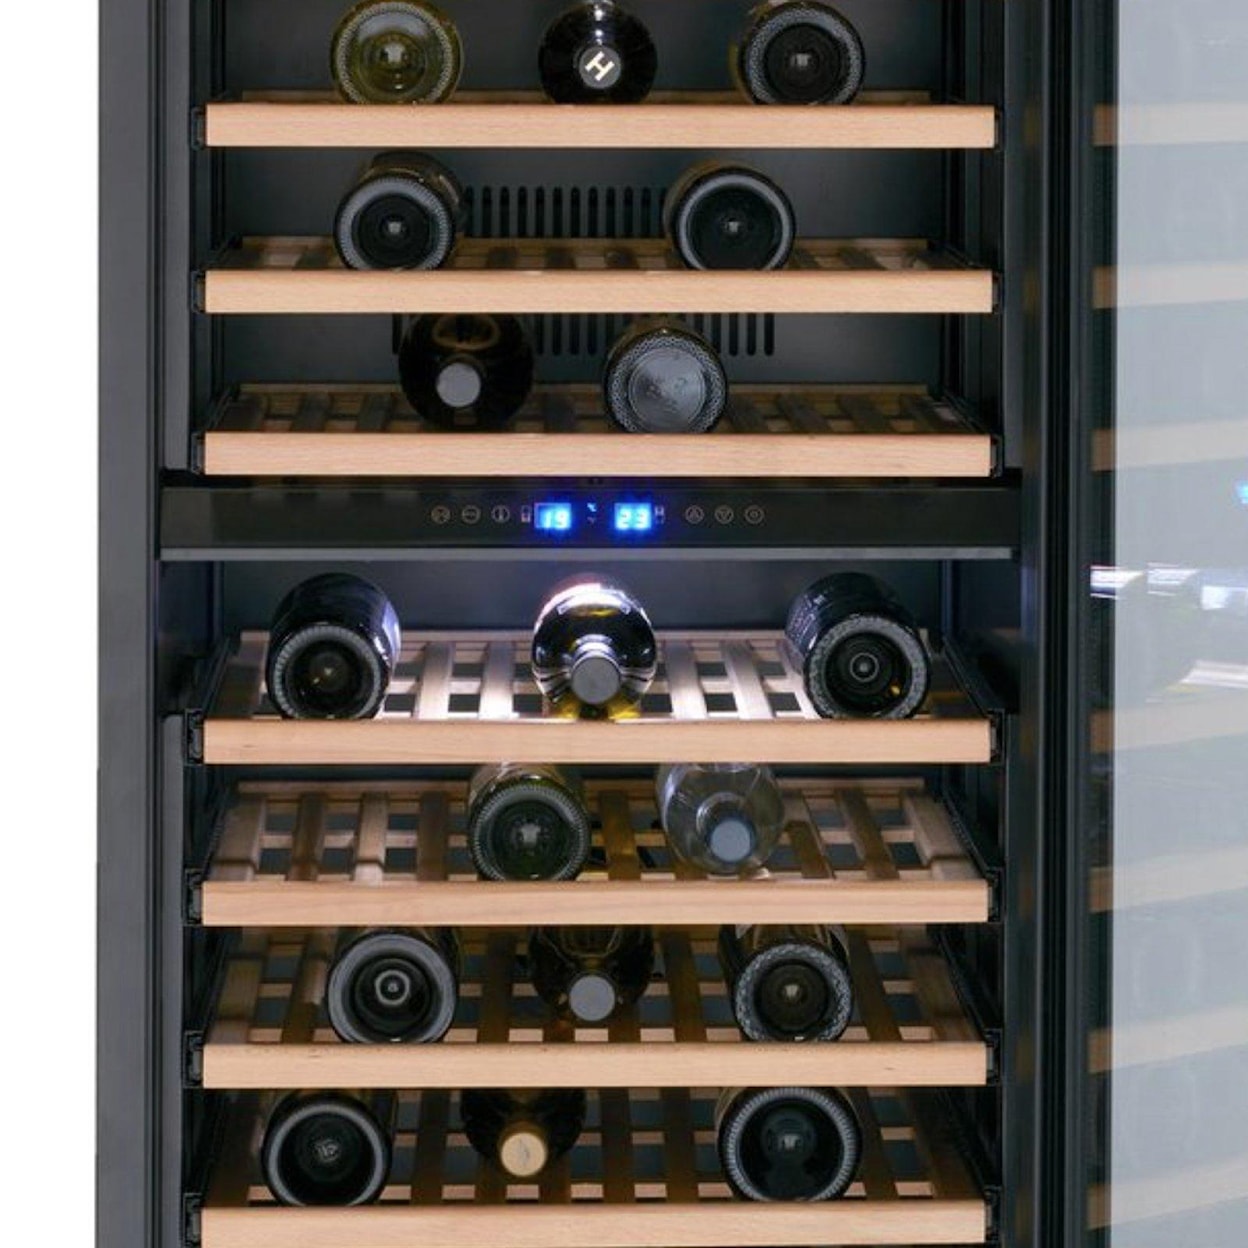 Avanti Refrigerators Wine Coolers